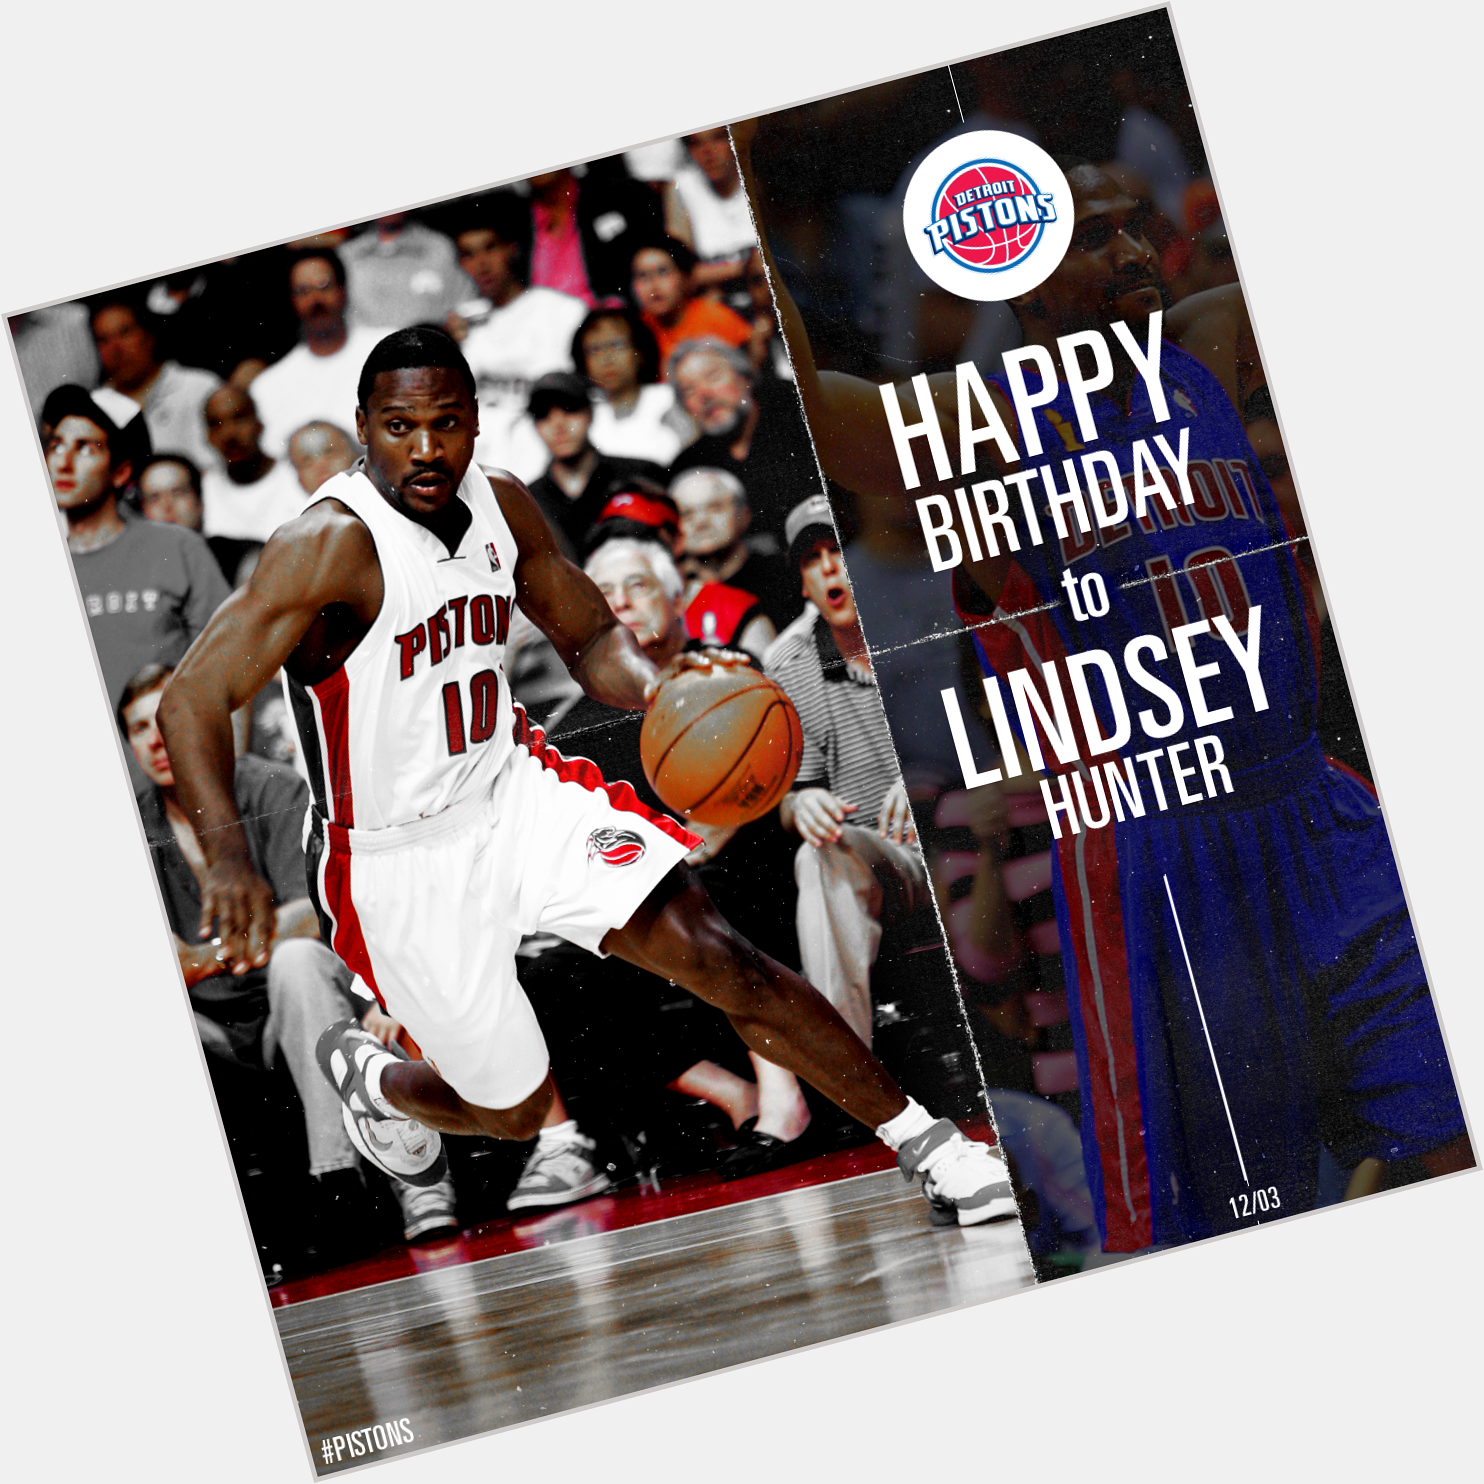 Happy Birthday to Lindsey Hunter! 